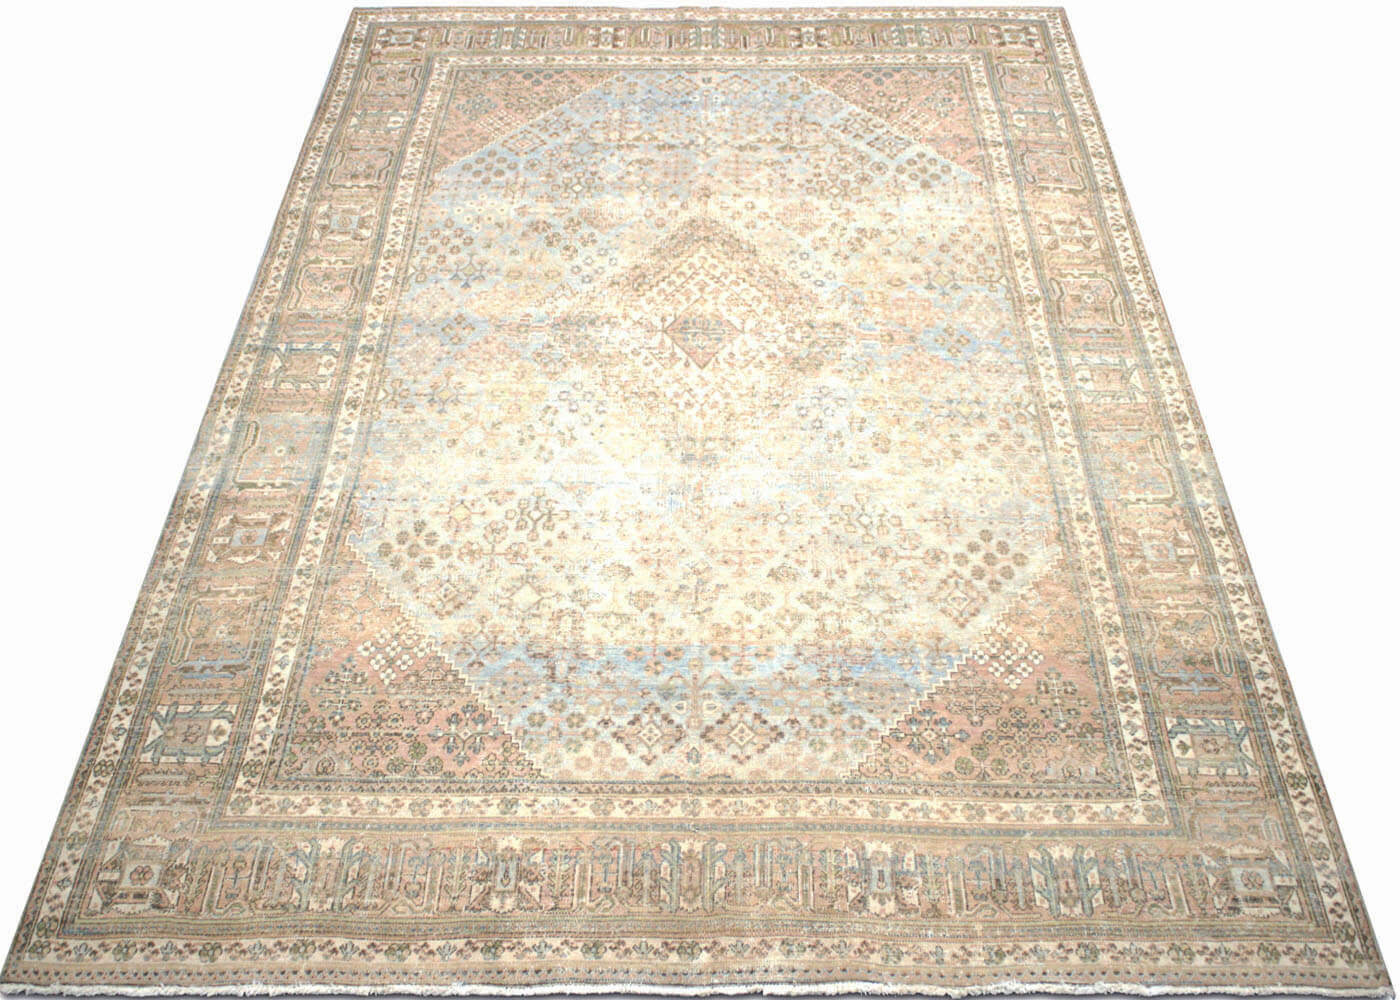 Vintage Persian Joshagan Carpet - 7'5" x 11'6"